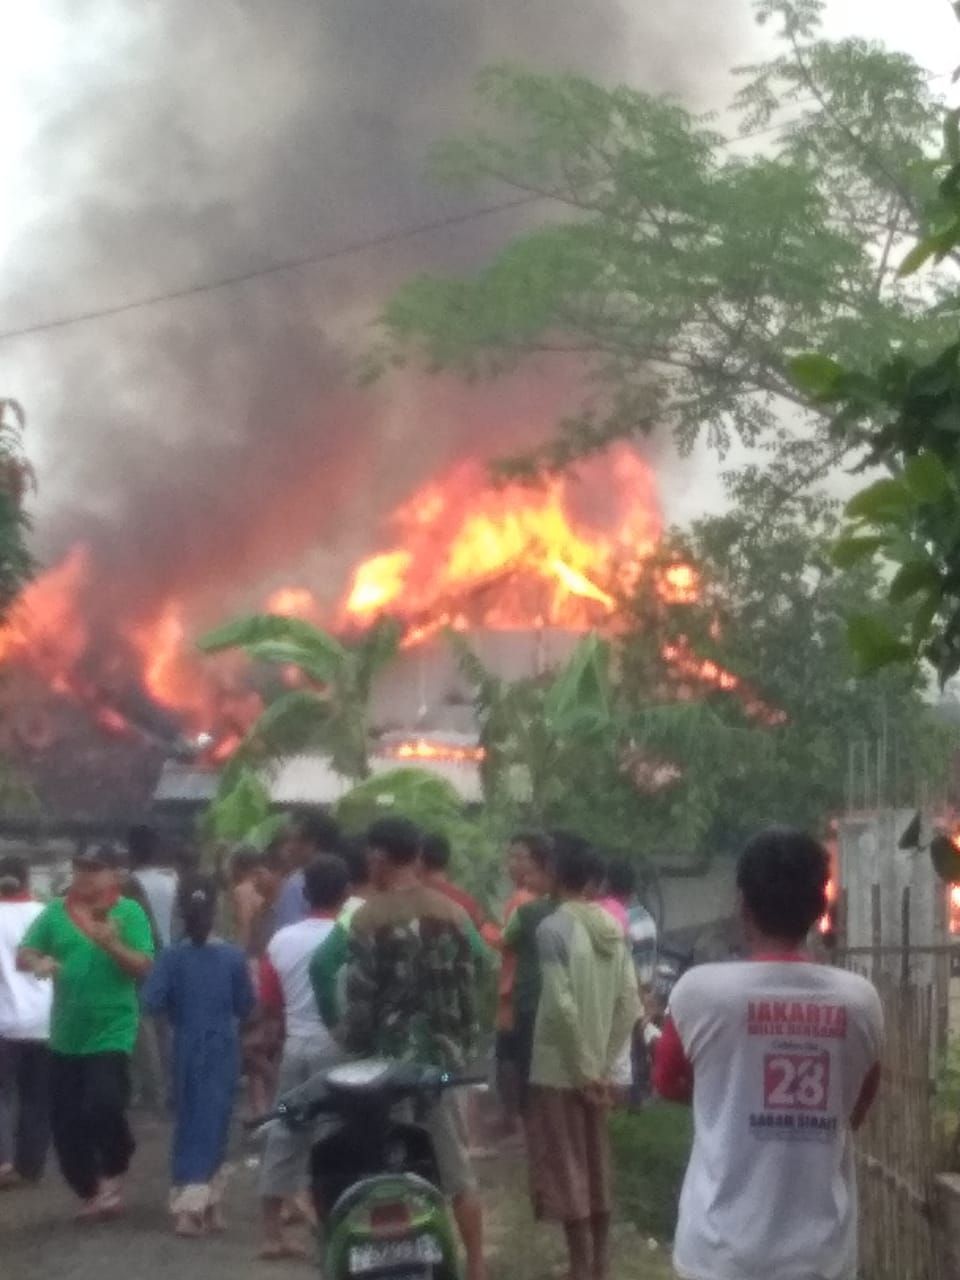 Kebakaran Kios Bensin di Tuban, 2 Korban yang Luka Bakar Sudah Pulang